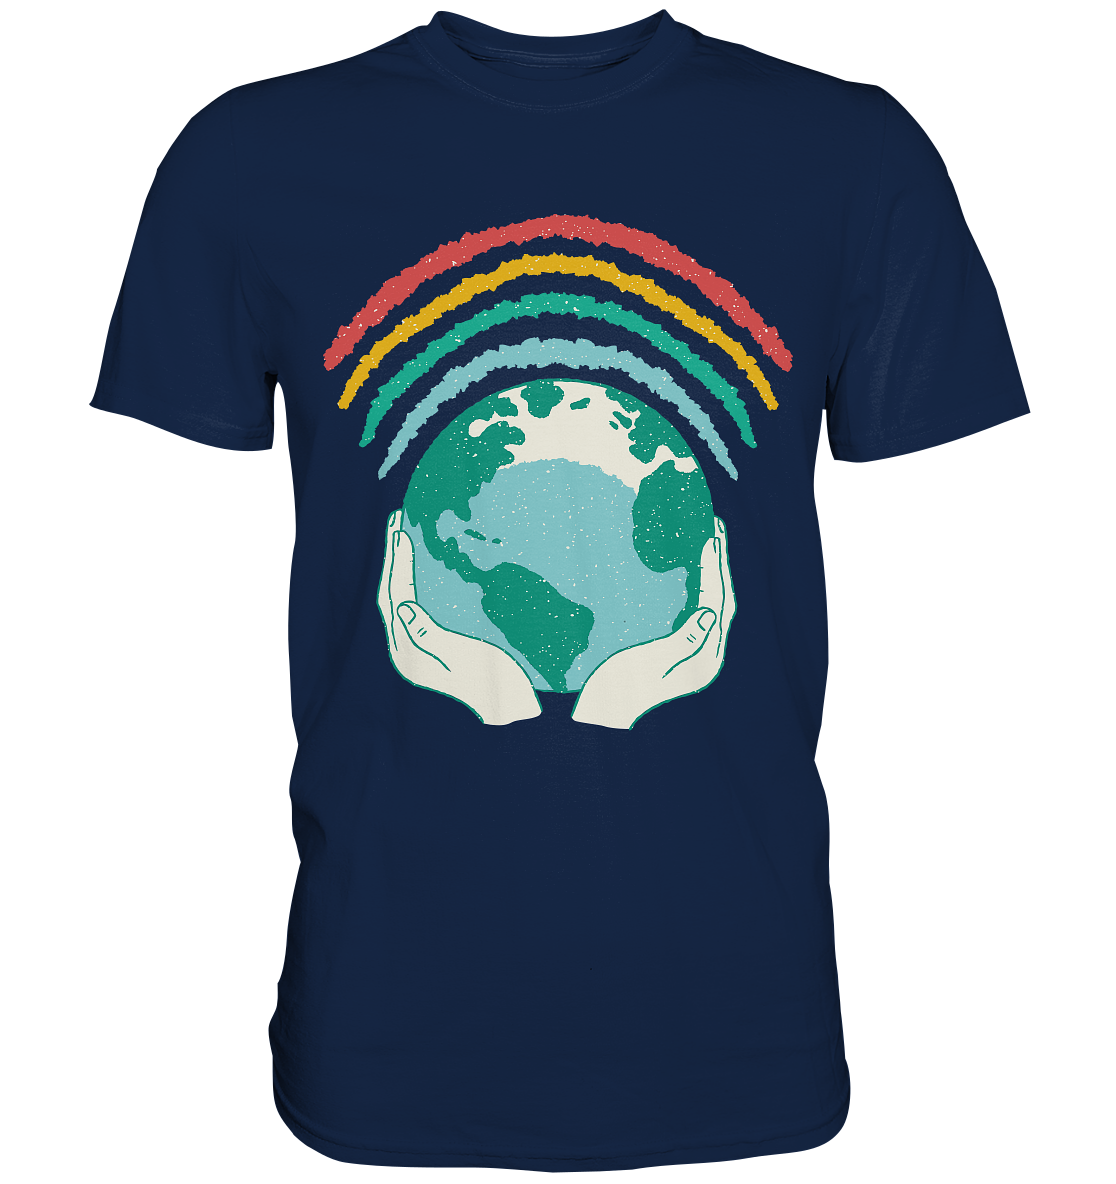 Regenbogen mit Weltkugel in Händen    - Classic Shirt